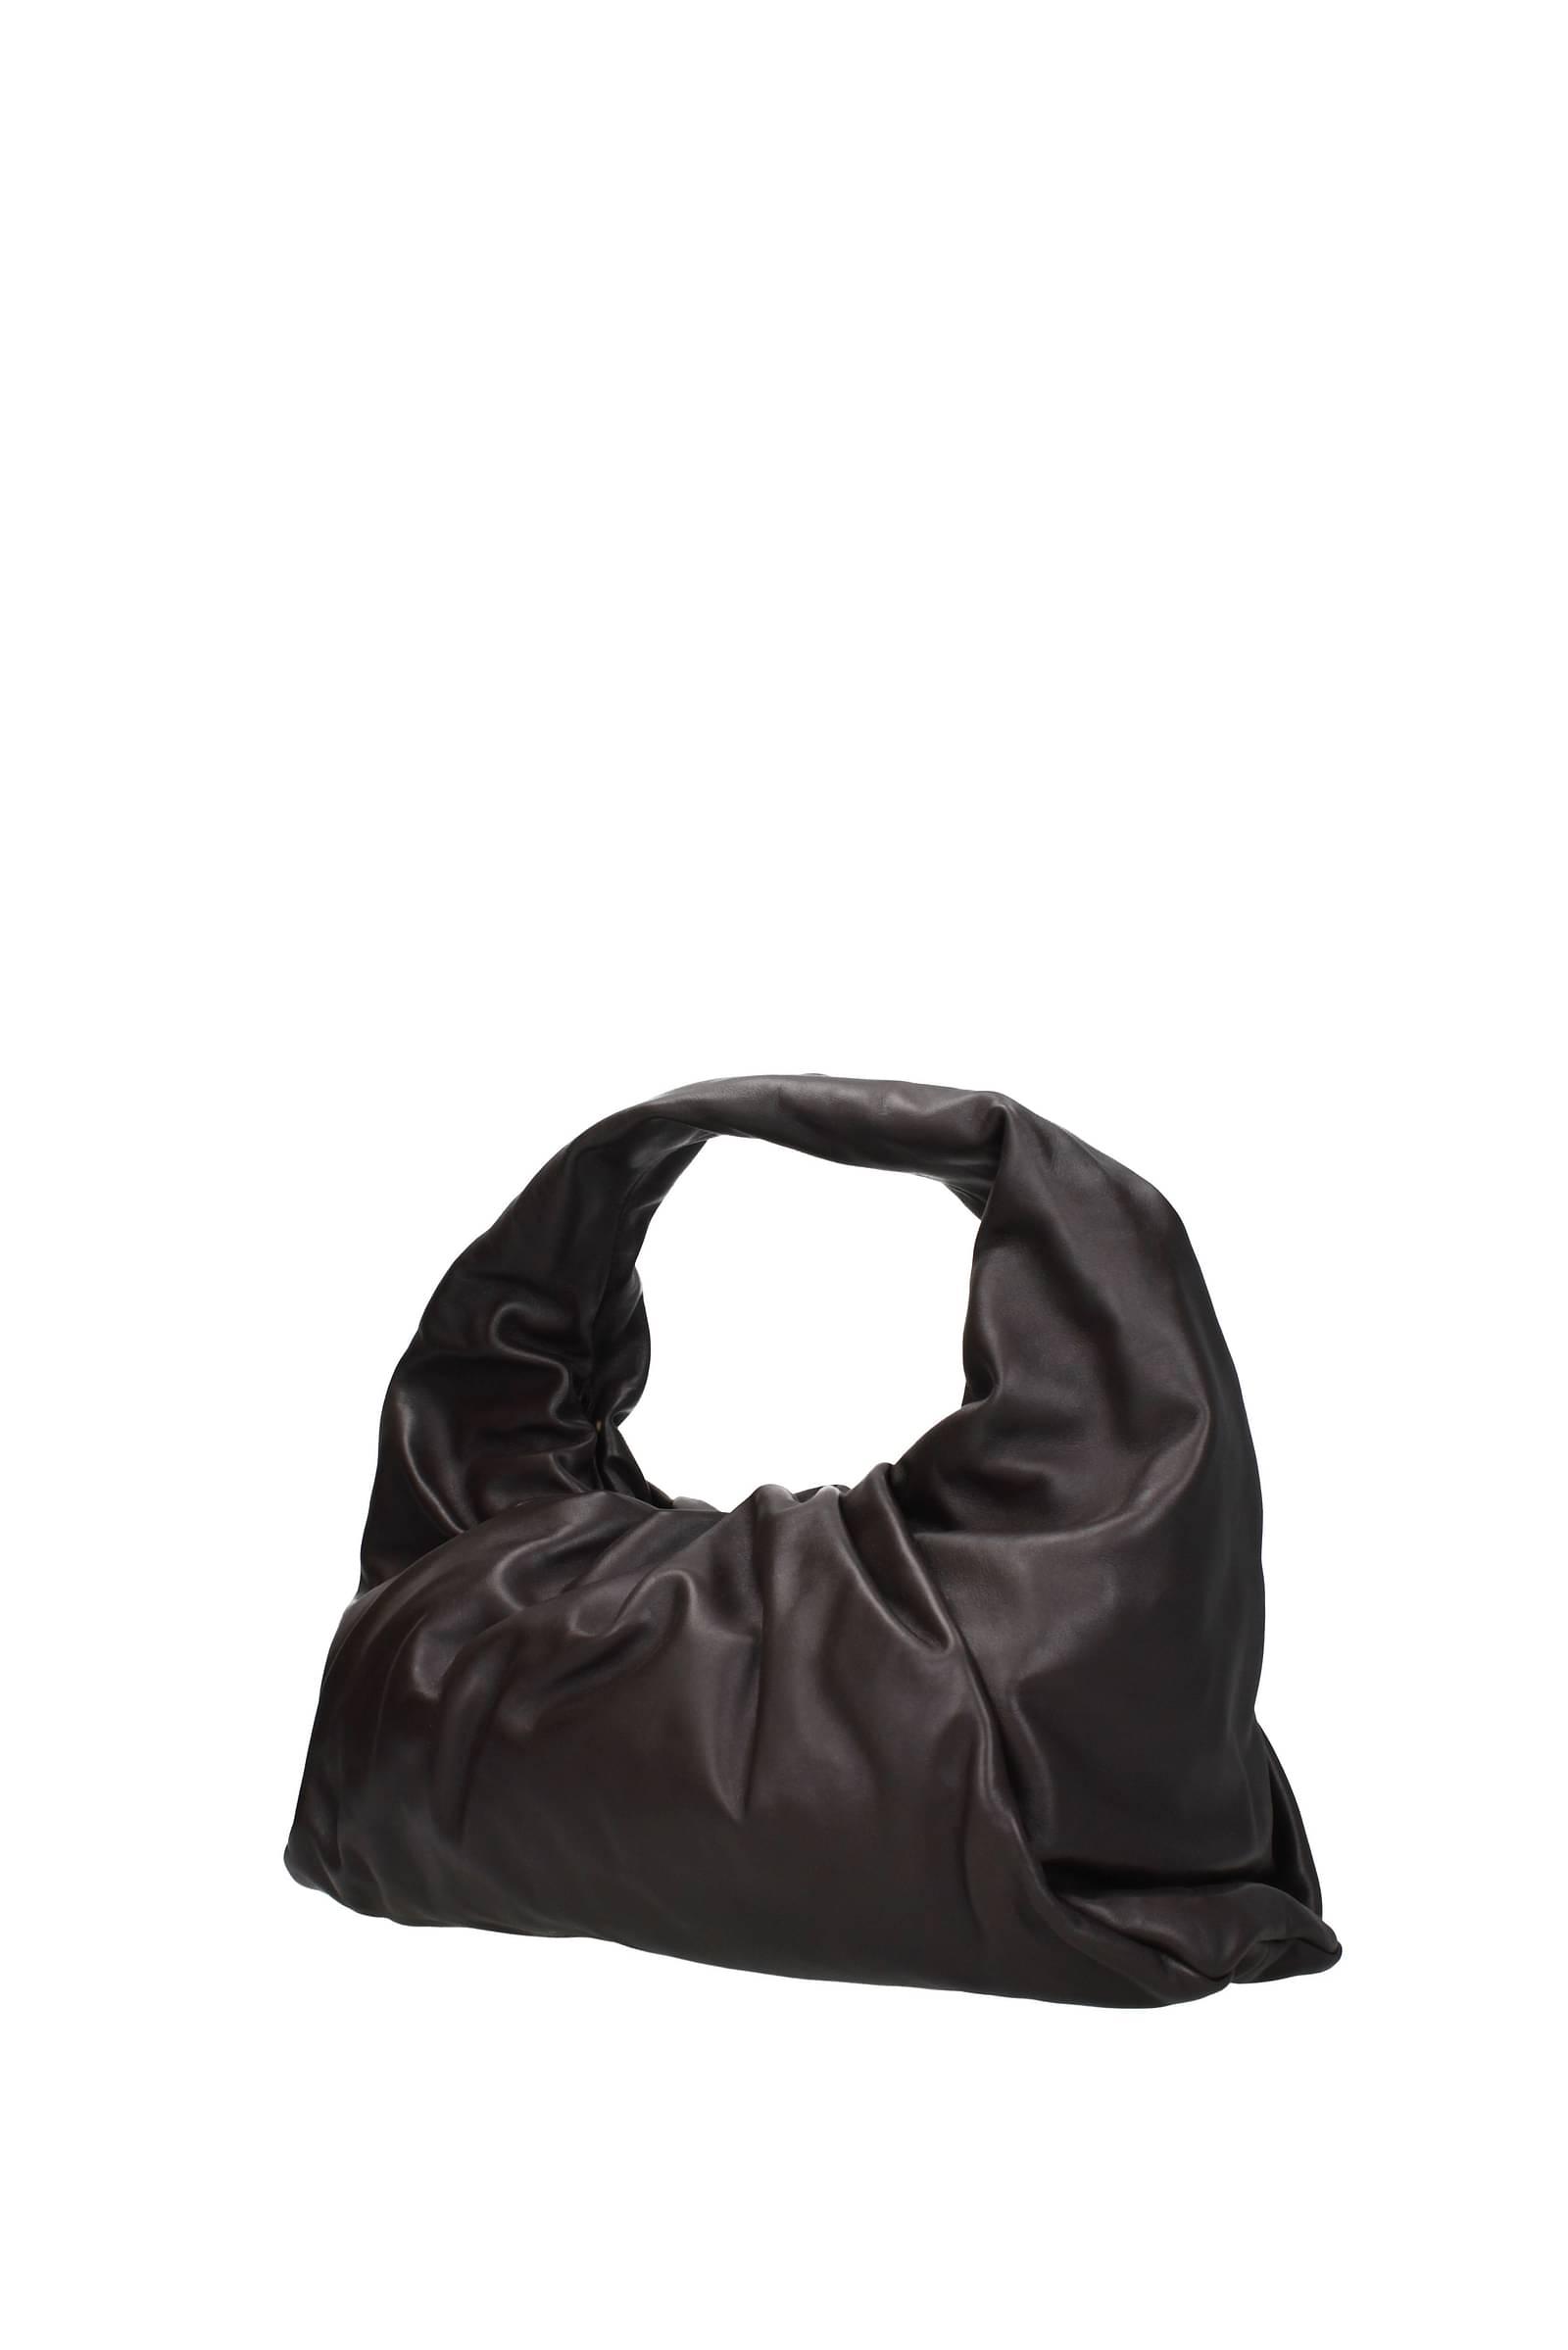 Bottega Veneta The Mini Pouch Dark Brown Leather Crossbody Bag